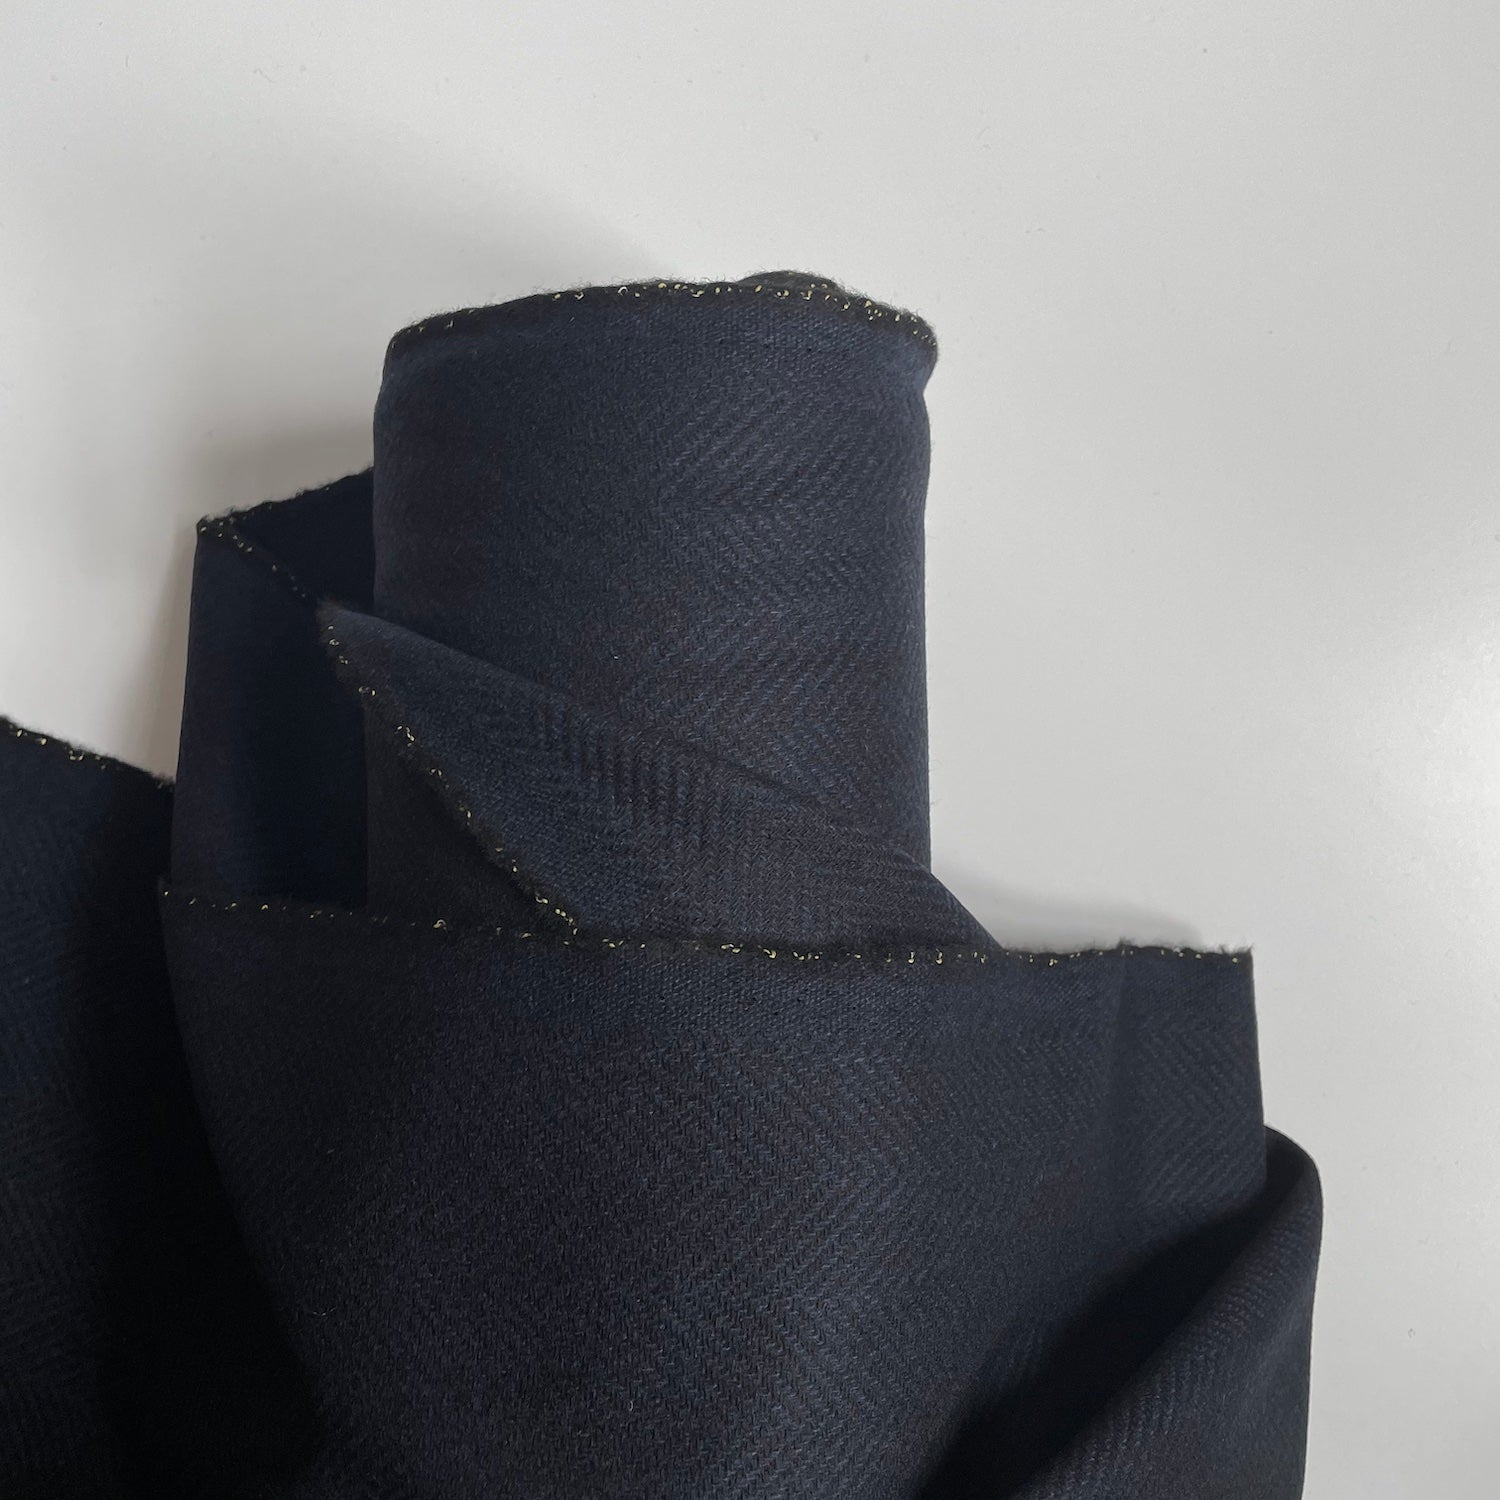 Merchant & Mills Fabric : Italian Wool Herringbone - Night Sky